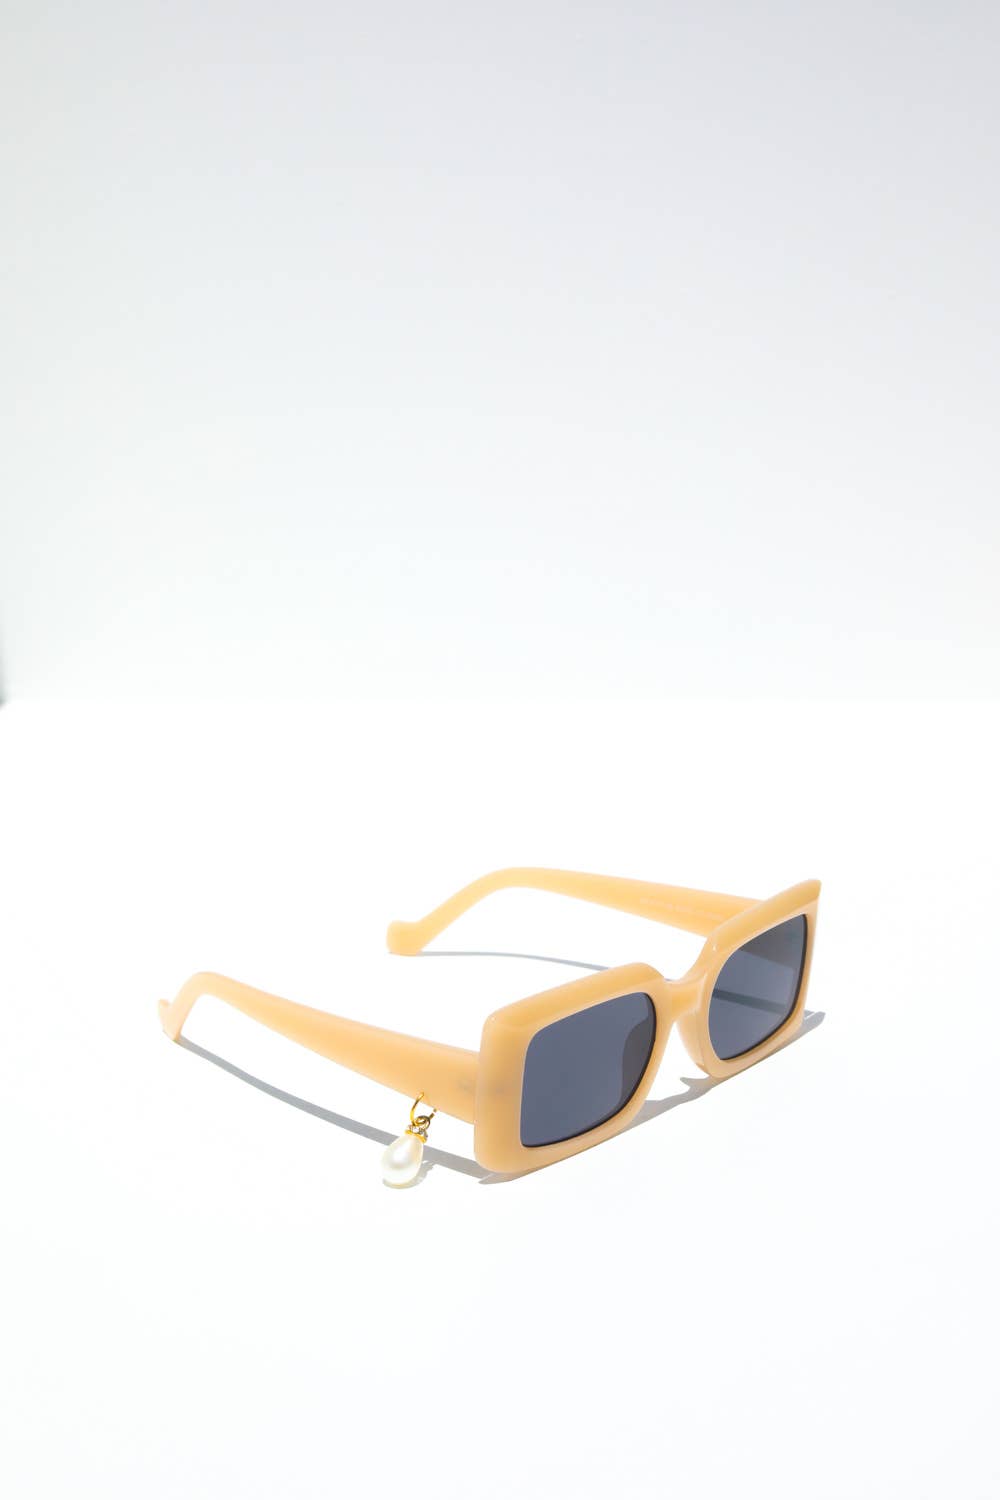 Mure and Grand - Mocktini Rectangle Sunglasses